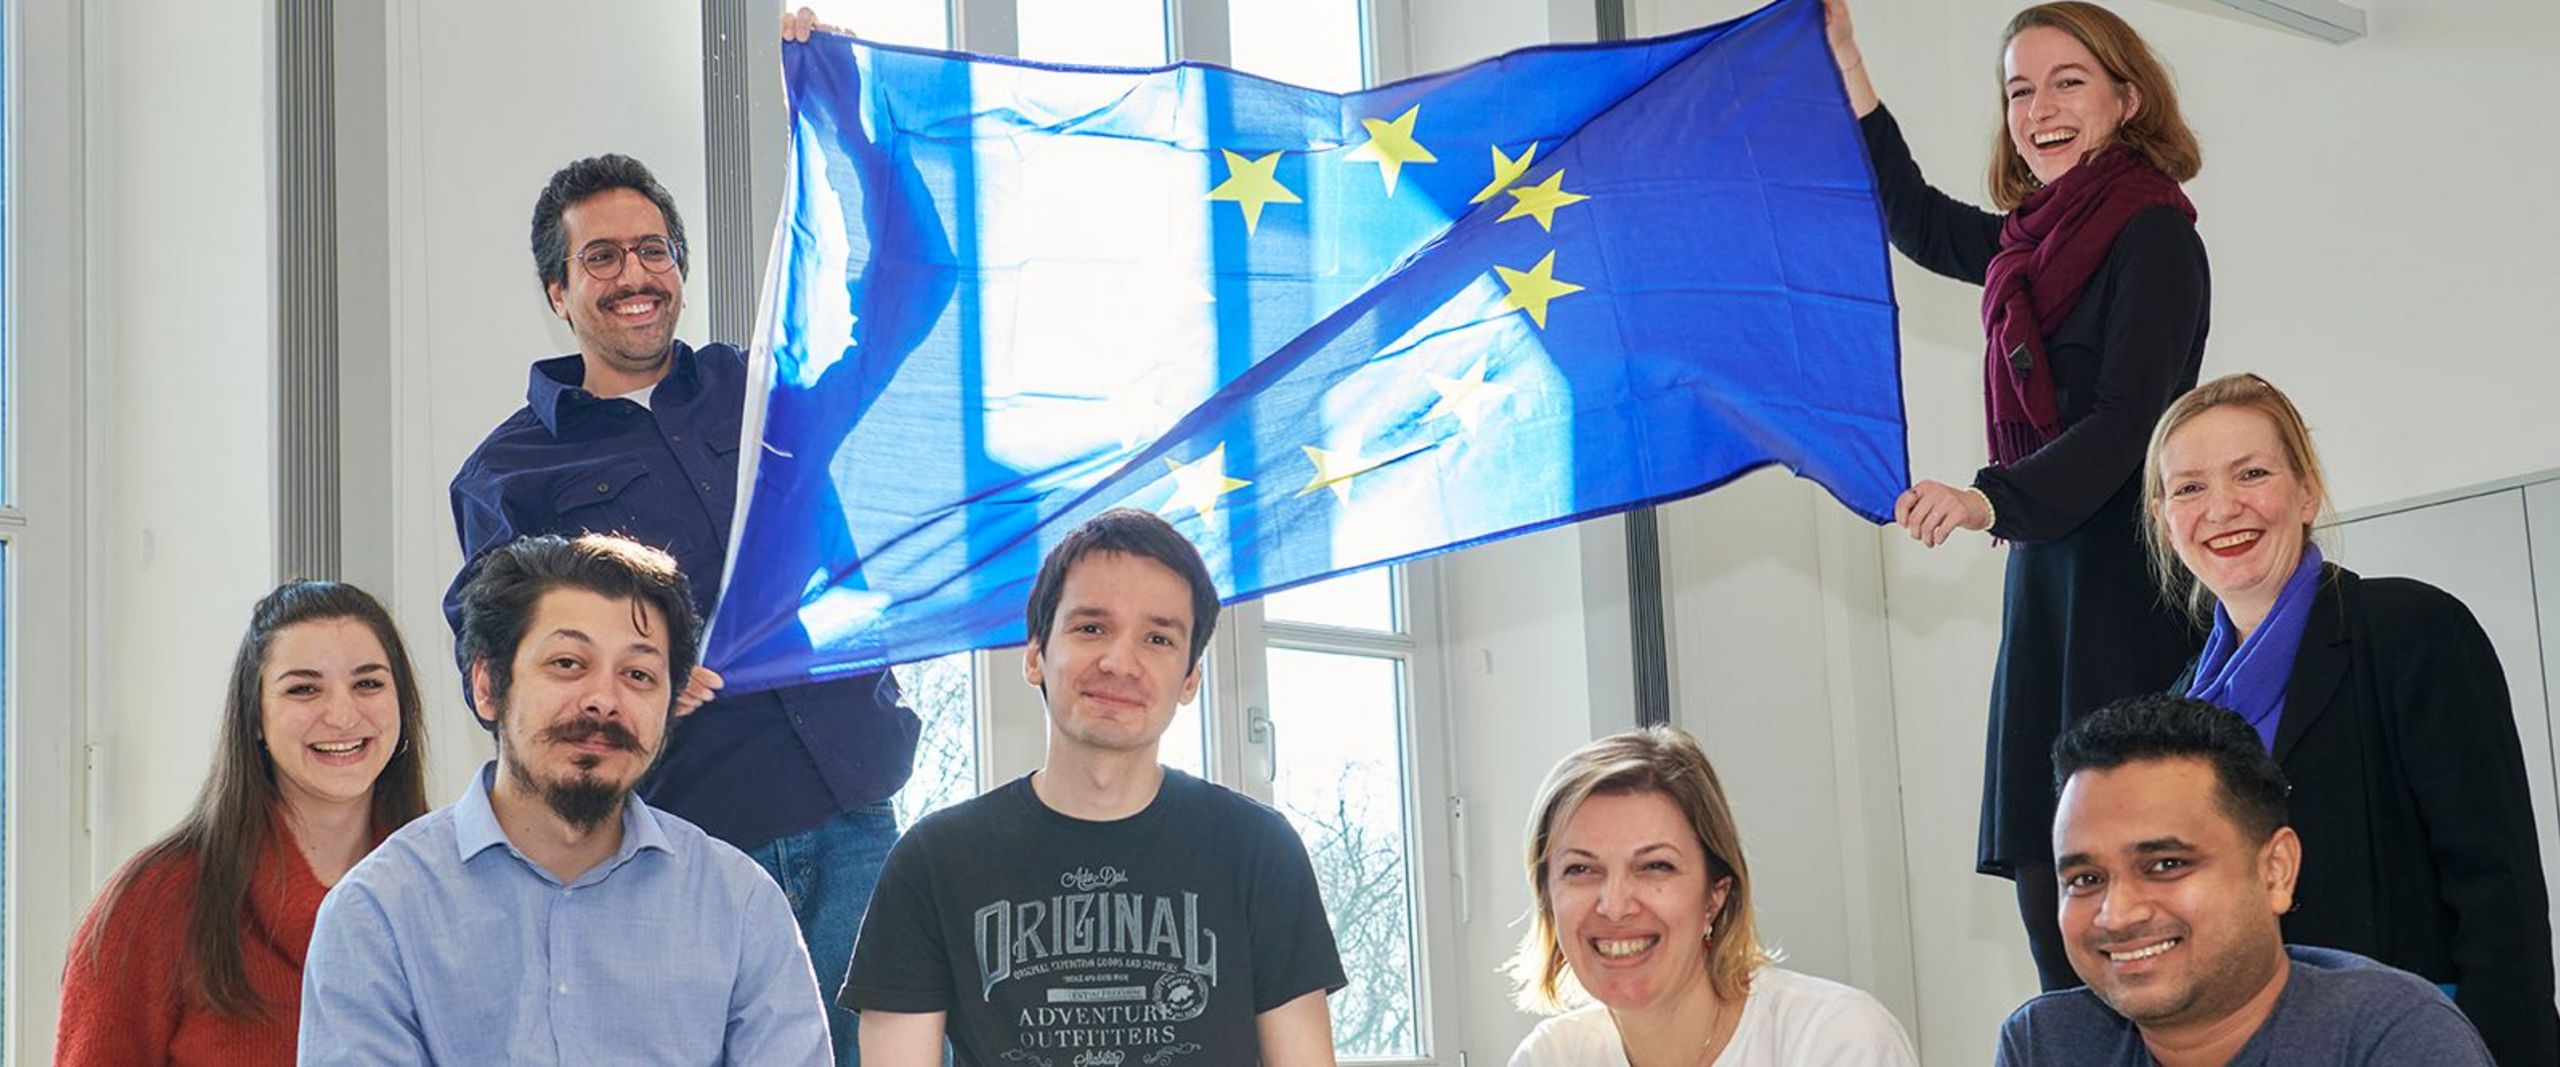 Studierende mit Europa Flagge